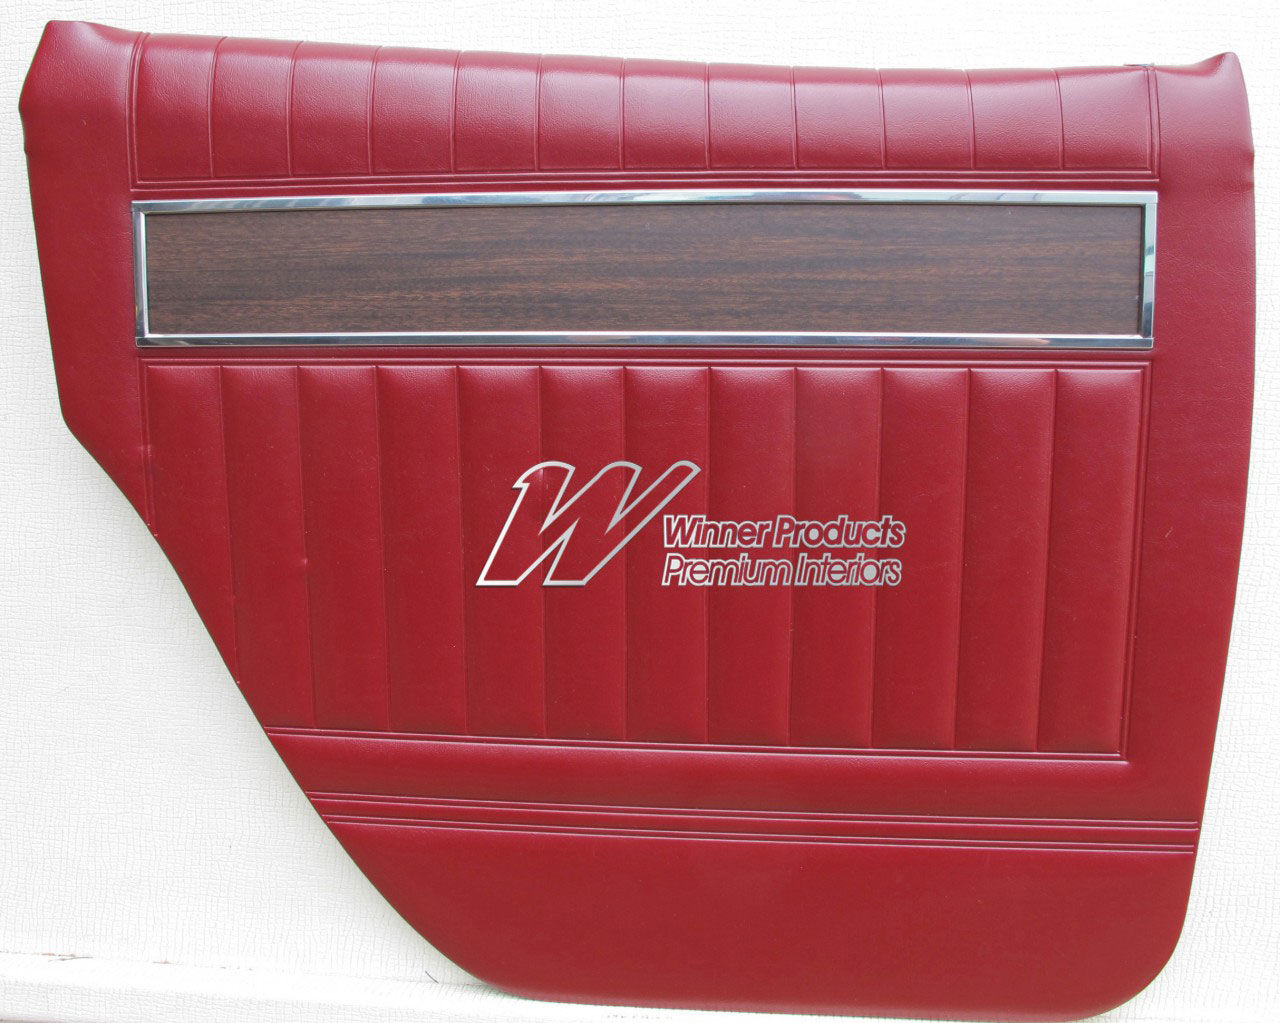 Holden Premier HK Premier Sedan 12S Yulunga Maroon & Castillion Weave Door Trims (Image 3 of 5)